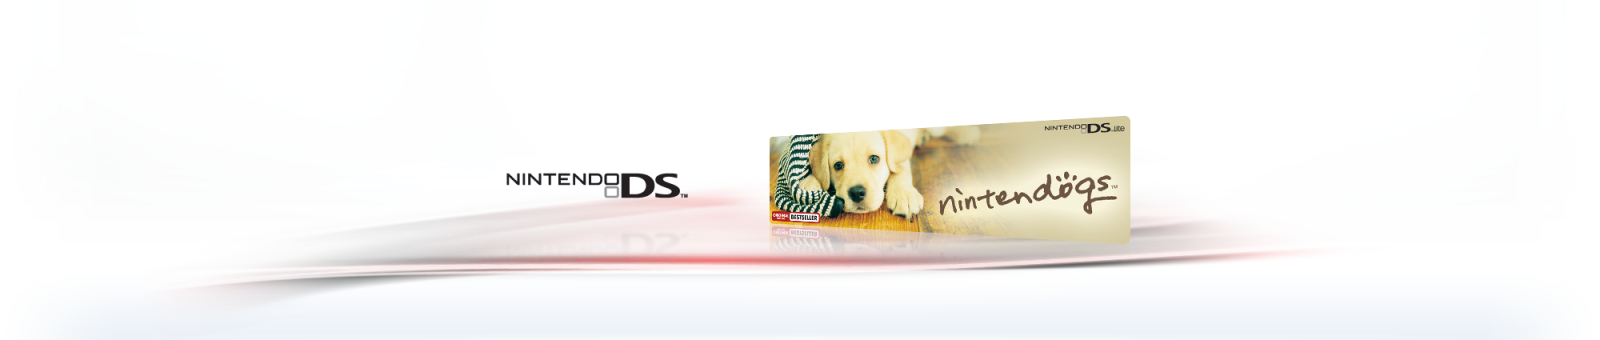 Nintendogs - Chihuahua & Freunde